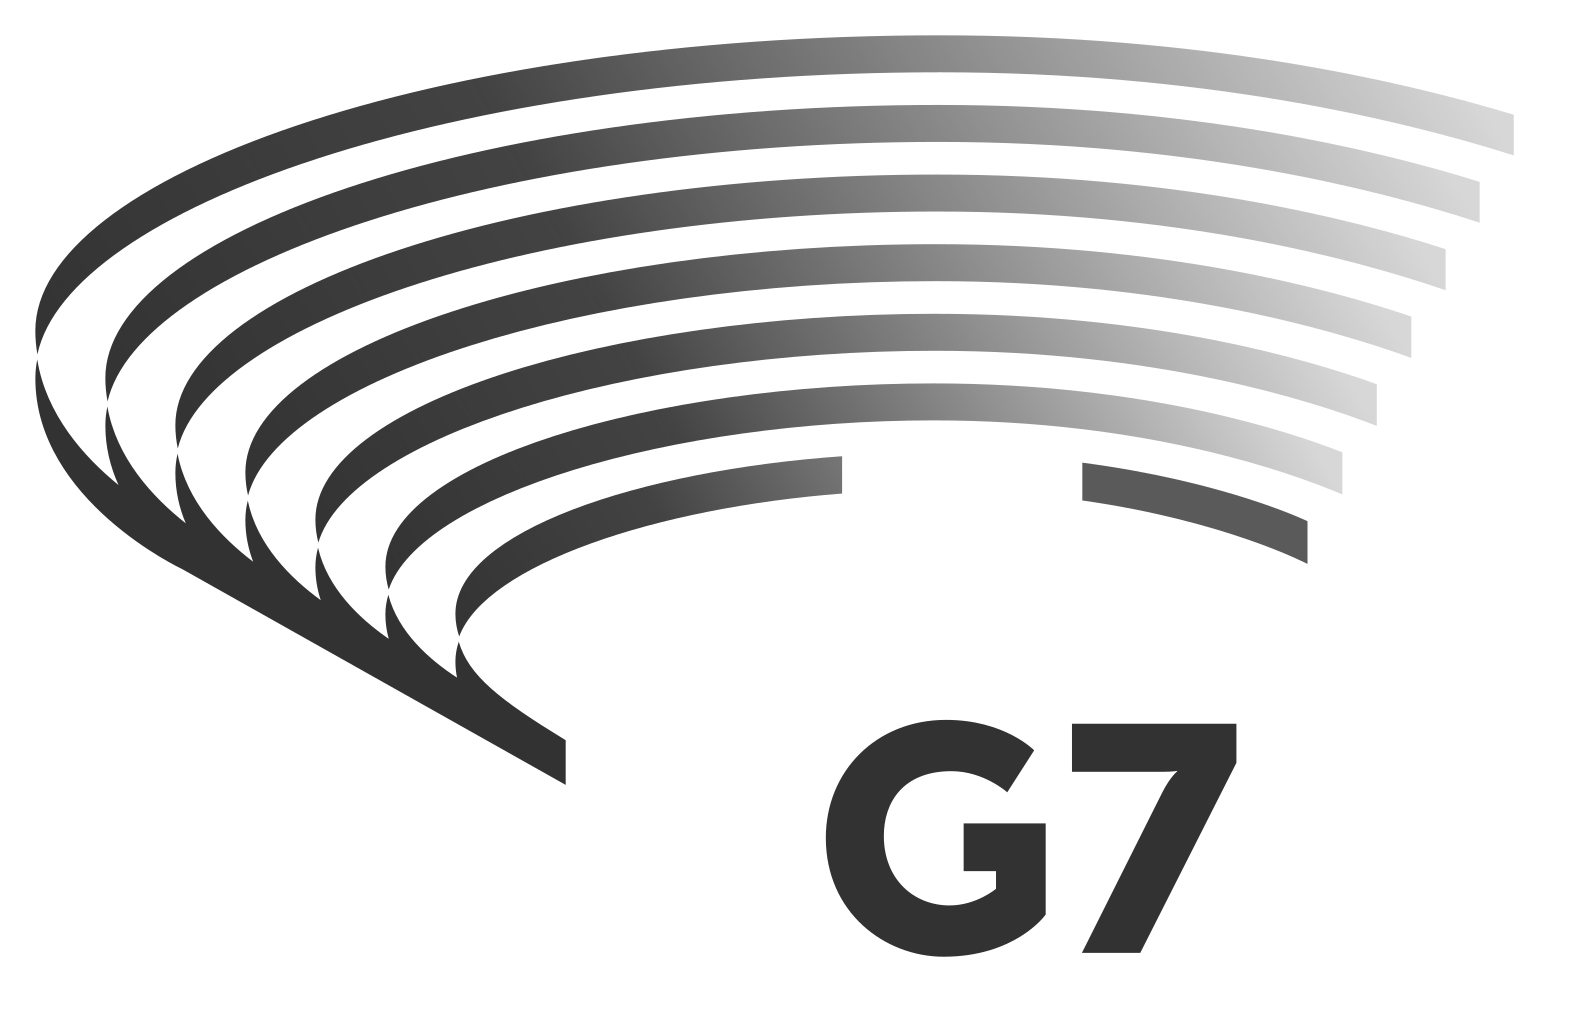 G7 Global Partnership